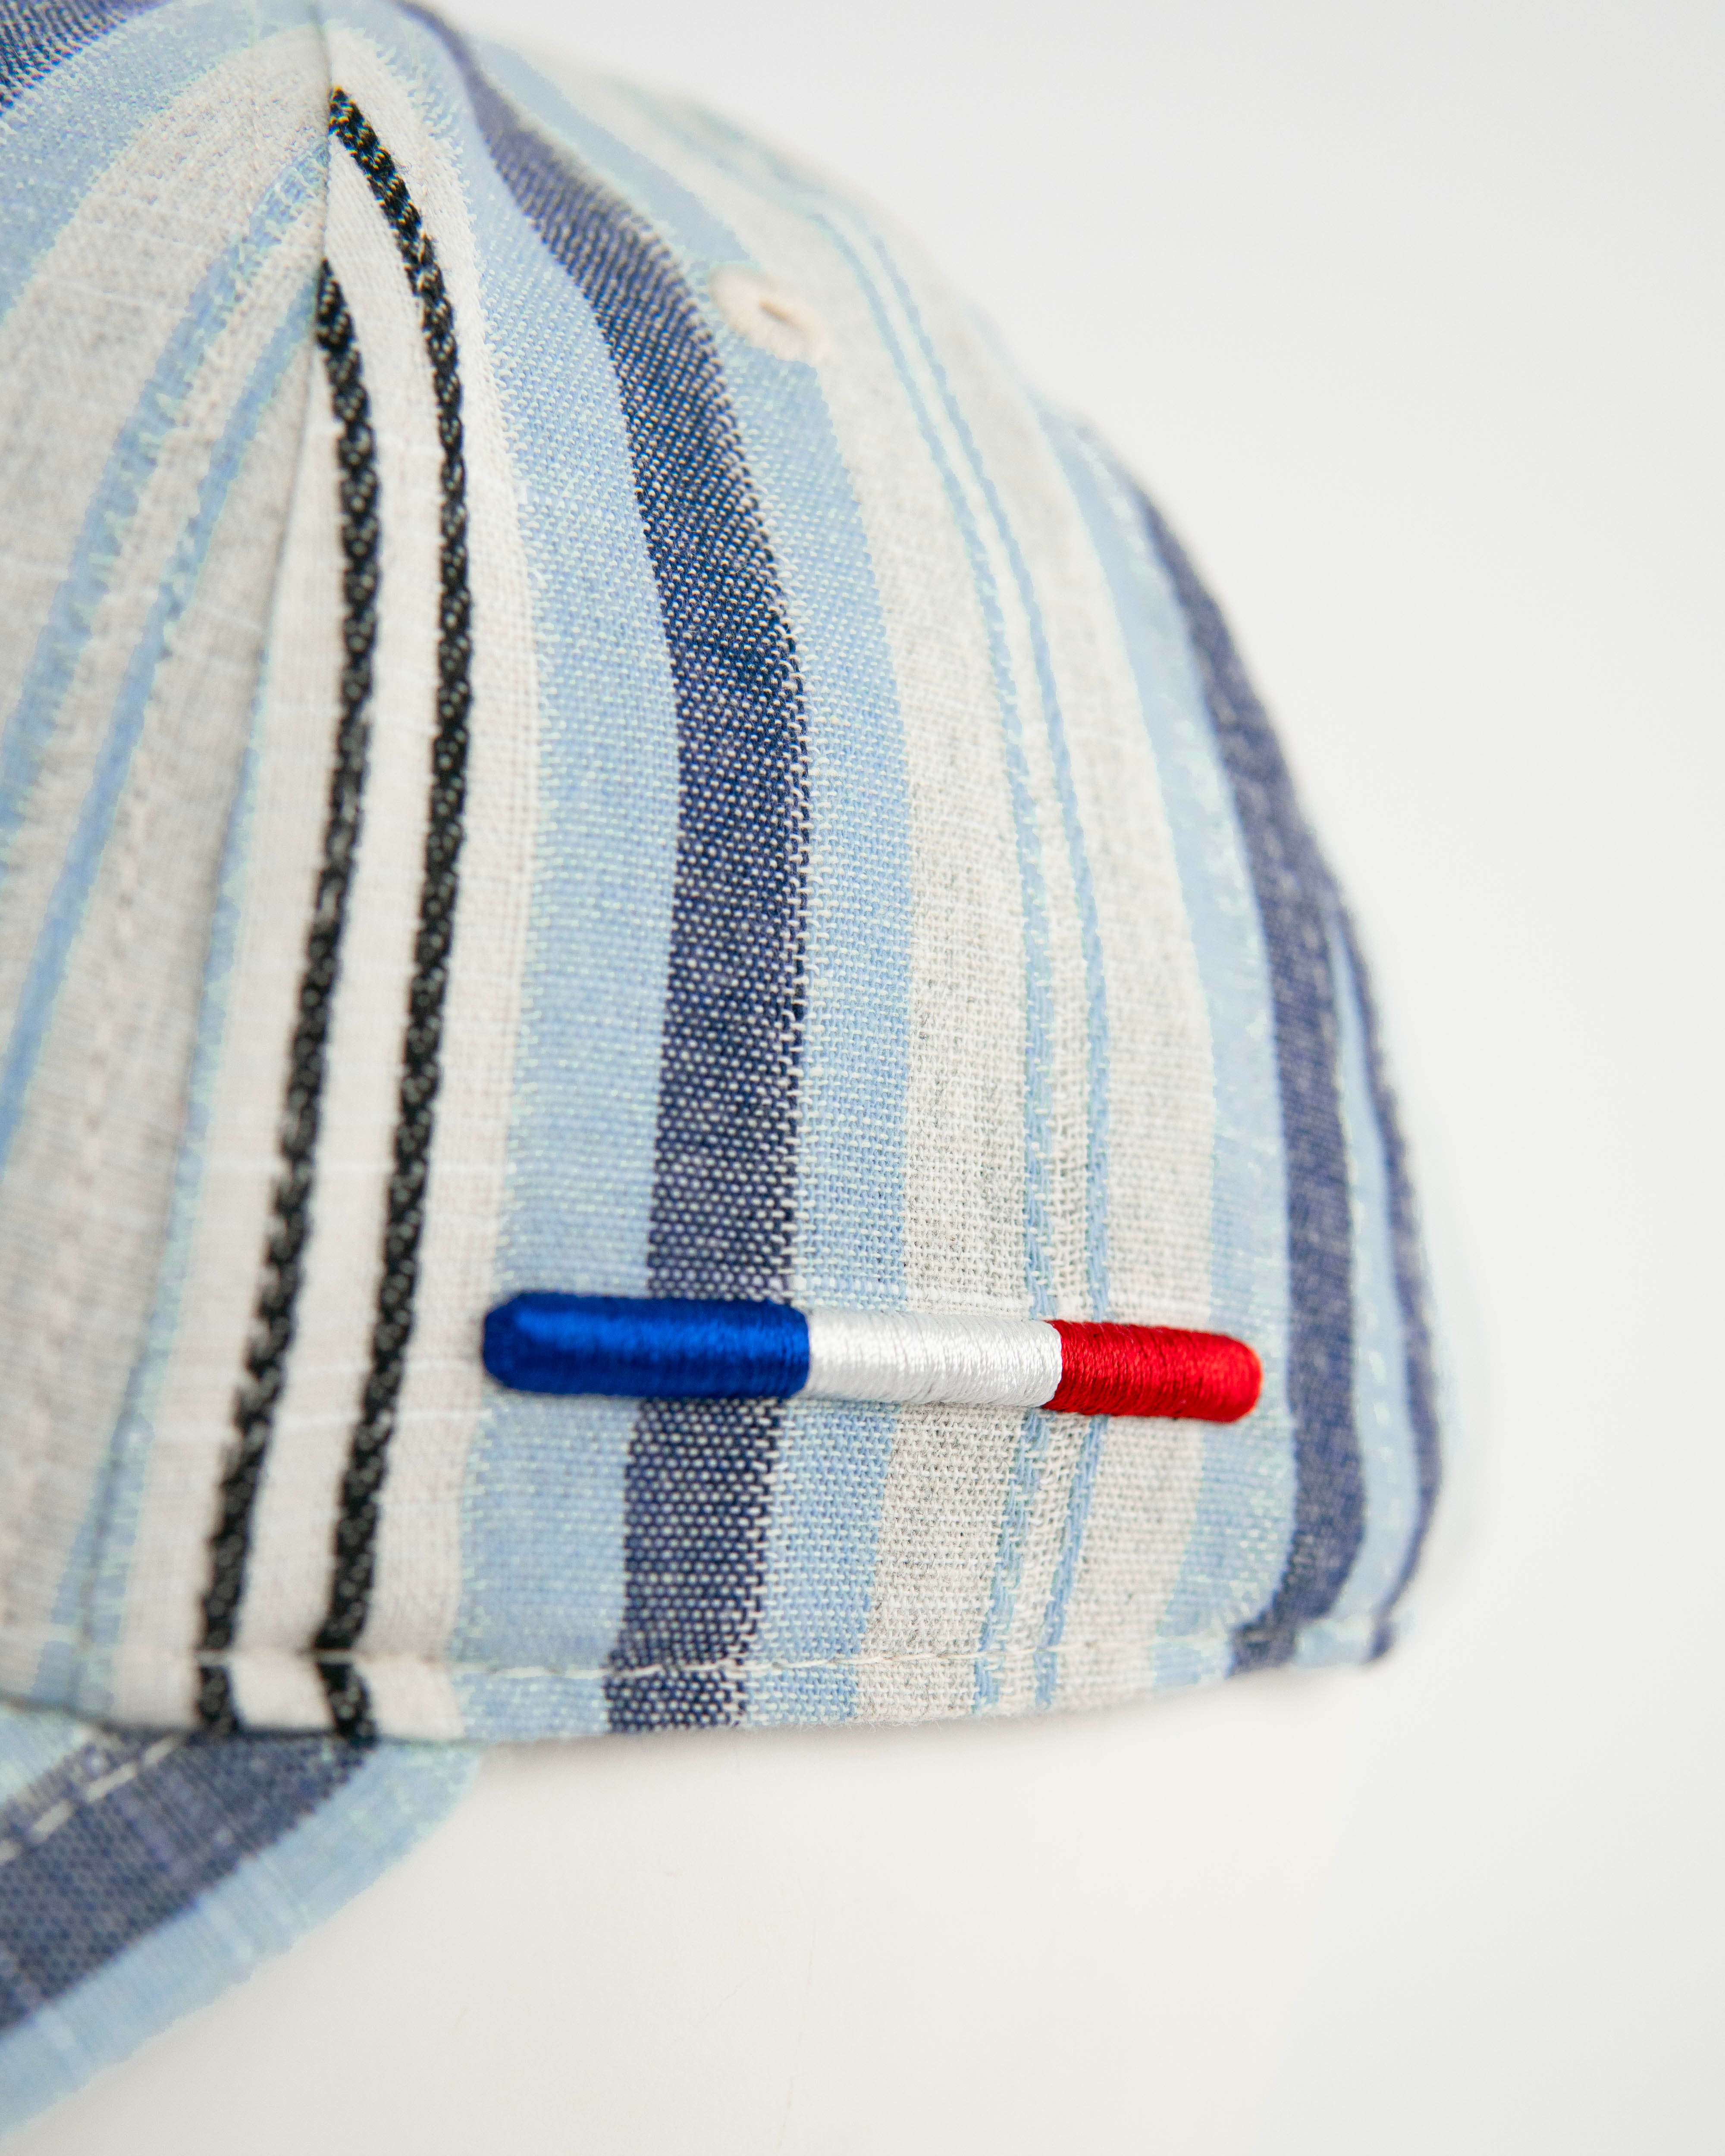 “Heritage” Cap Blue Striped Patterns